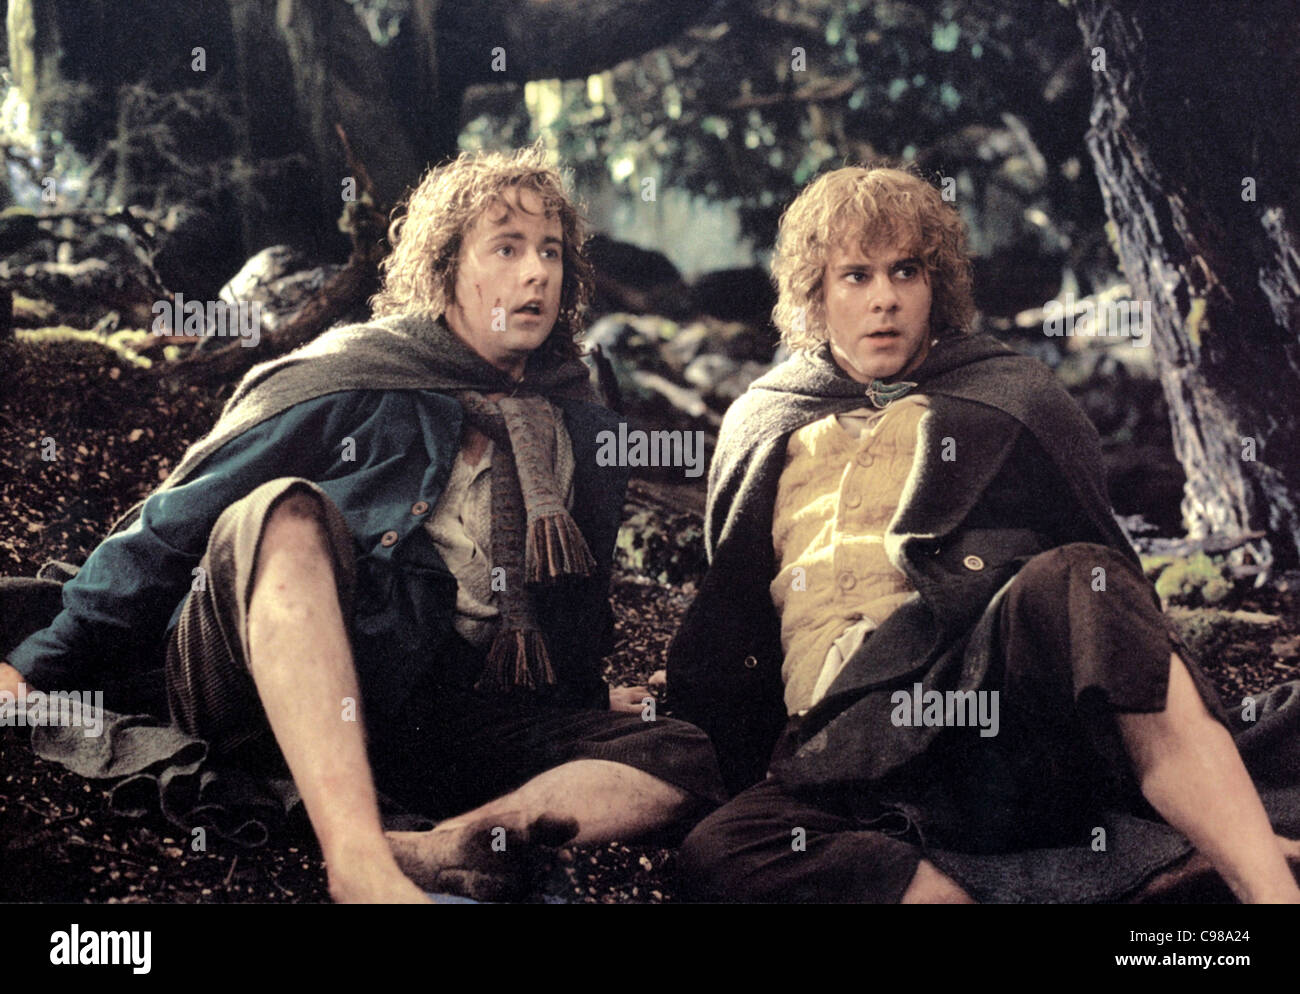 Dominic monaghan hobbit -Fotos und -Bildmaterial in hoher Auflösung – Alamy